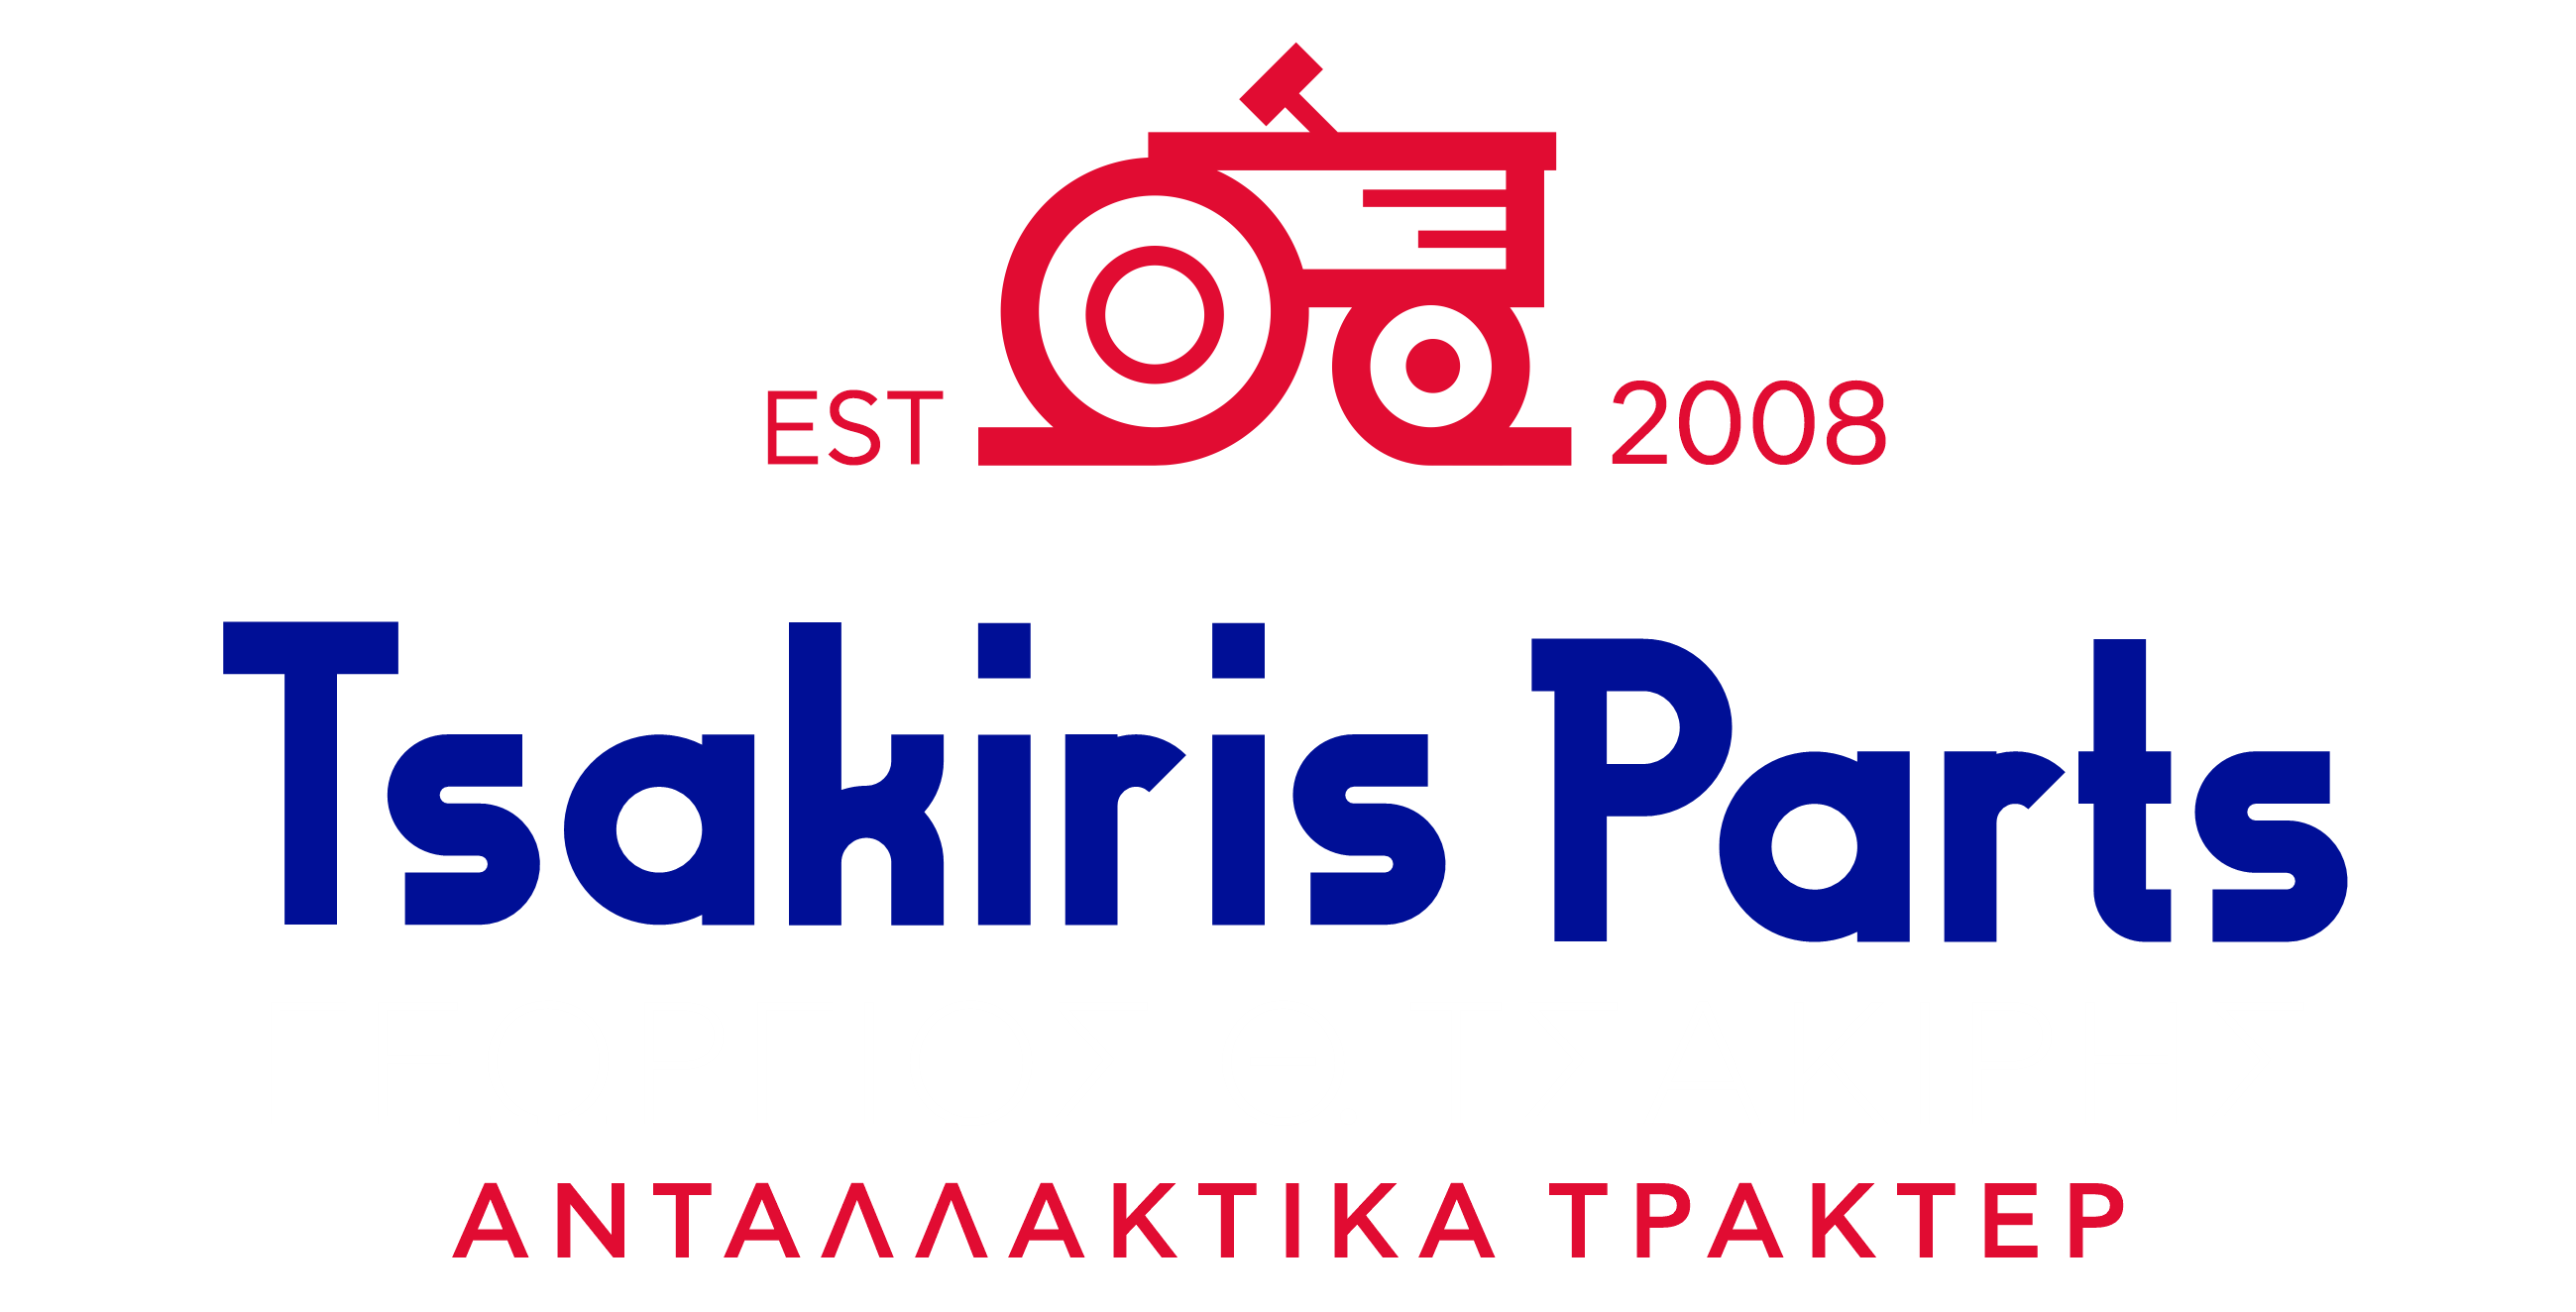 tsakirisparts logo footer